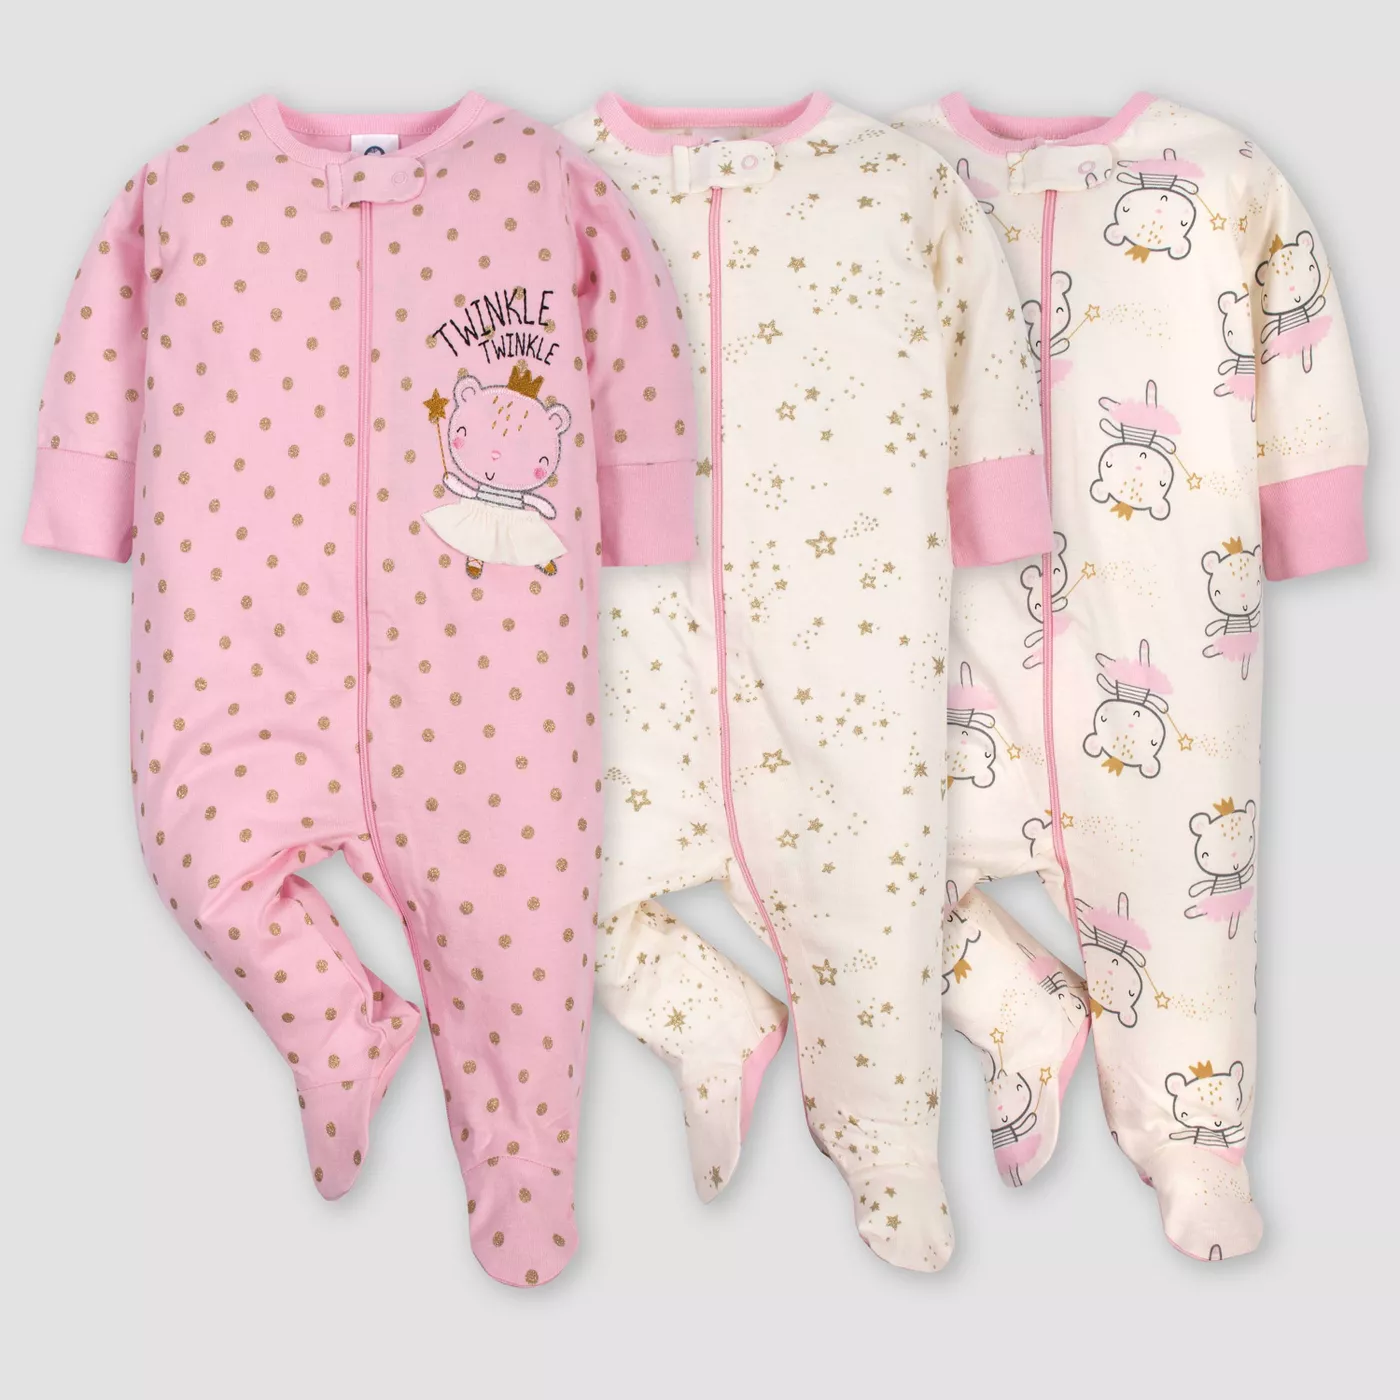 Gerber Baby Girls' 3pk Sleep N' Play Pajamas